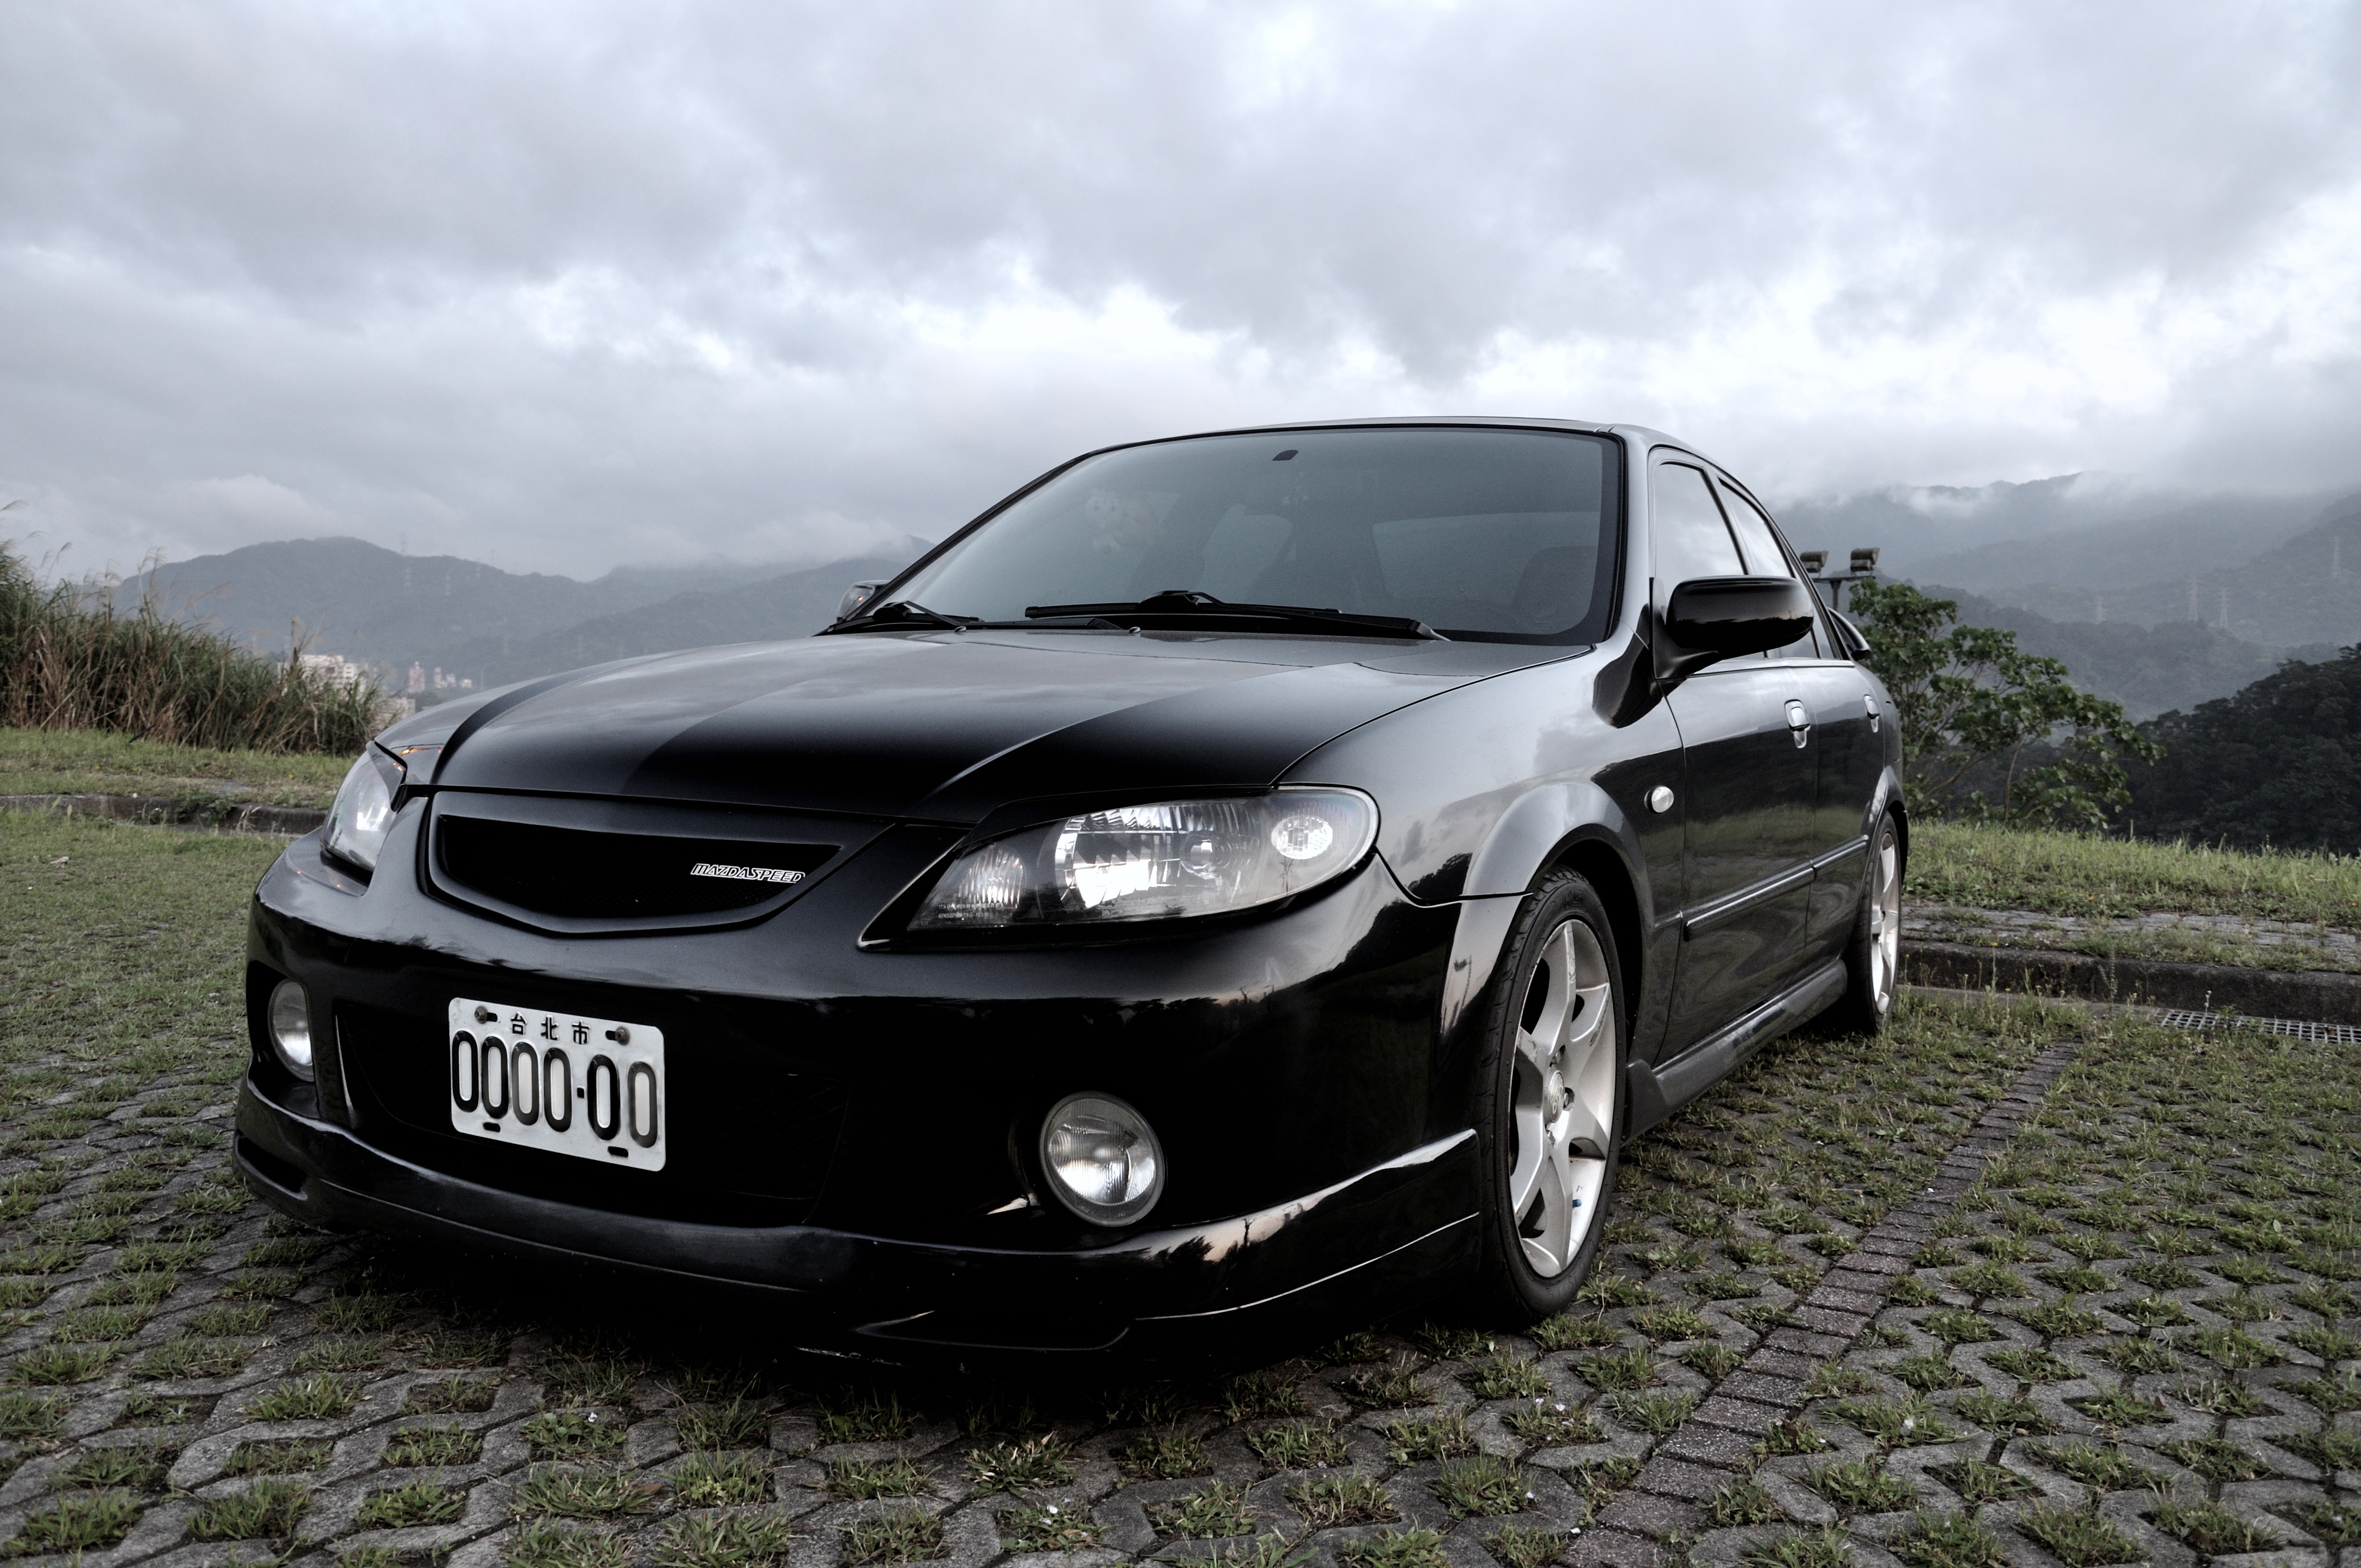 Mazda 323 Protege 2.0 | Flickr - Photo Sharing!